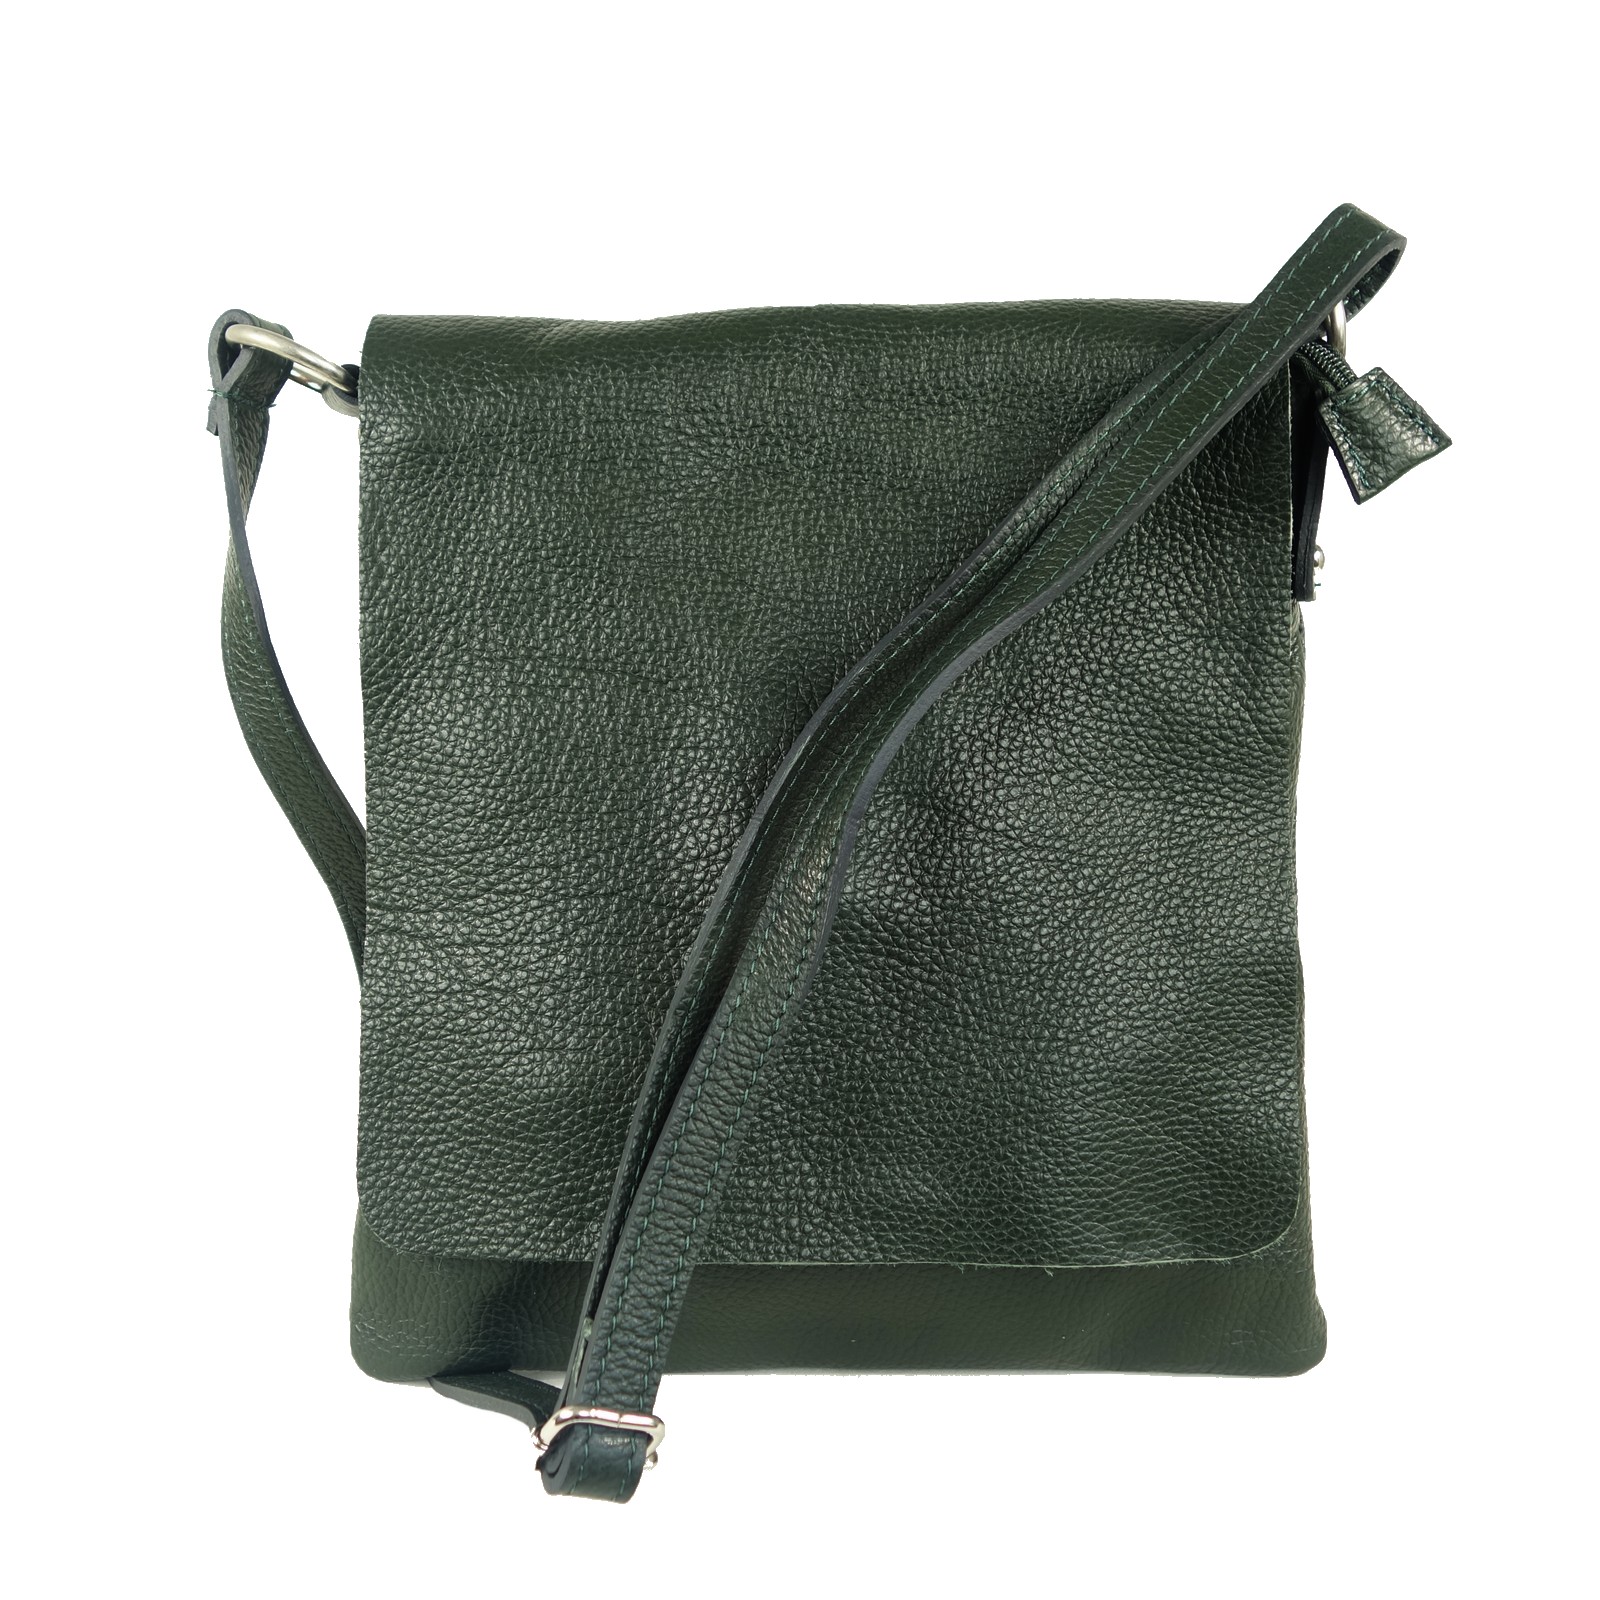 Grand sac pochette bandoulière cuir vert Elena/Collection Espritcuir